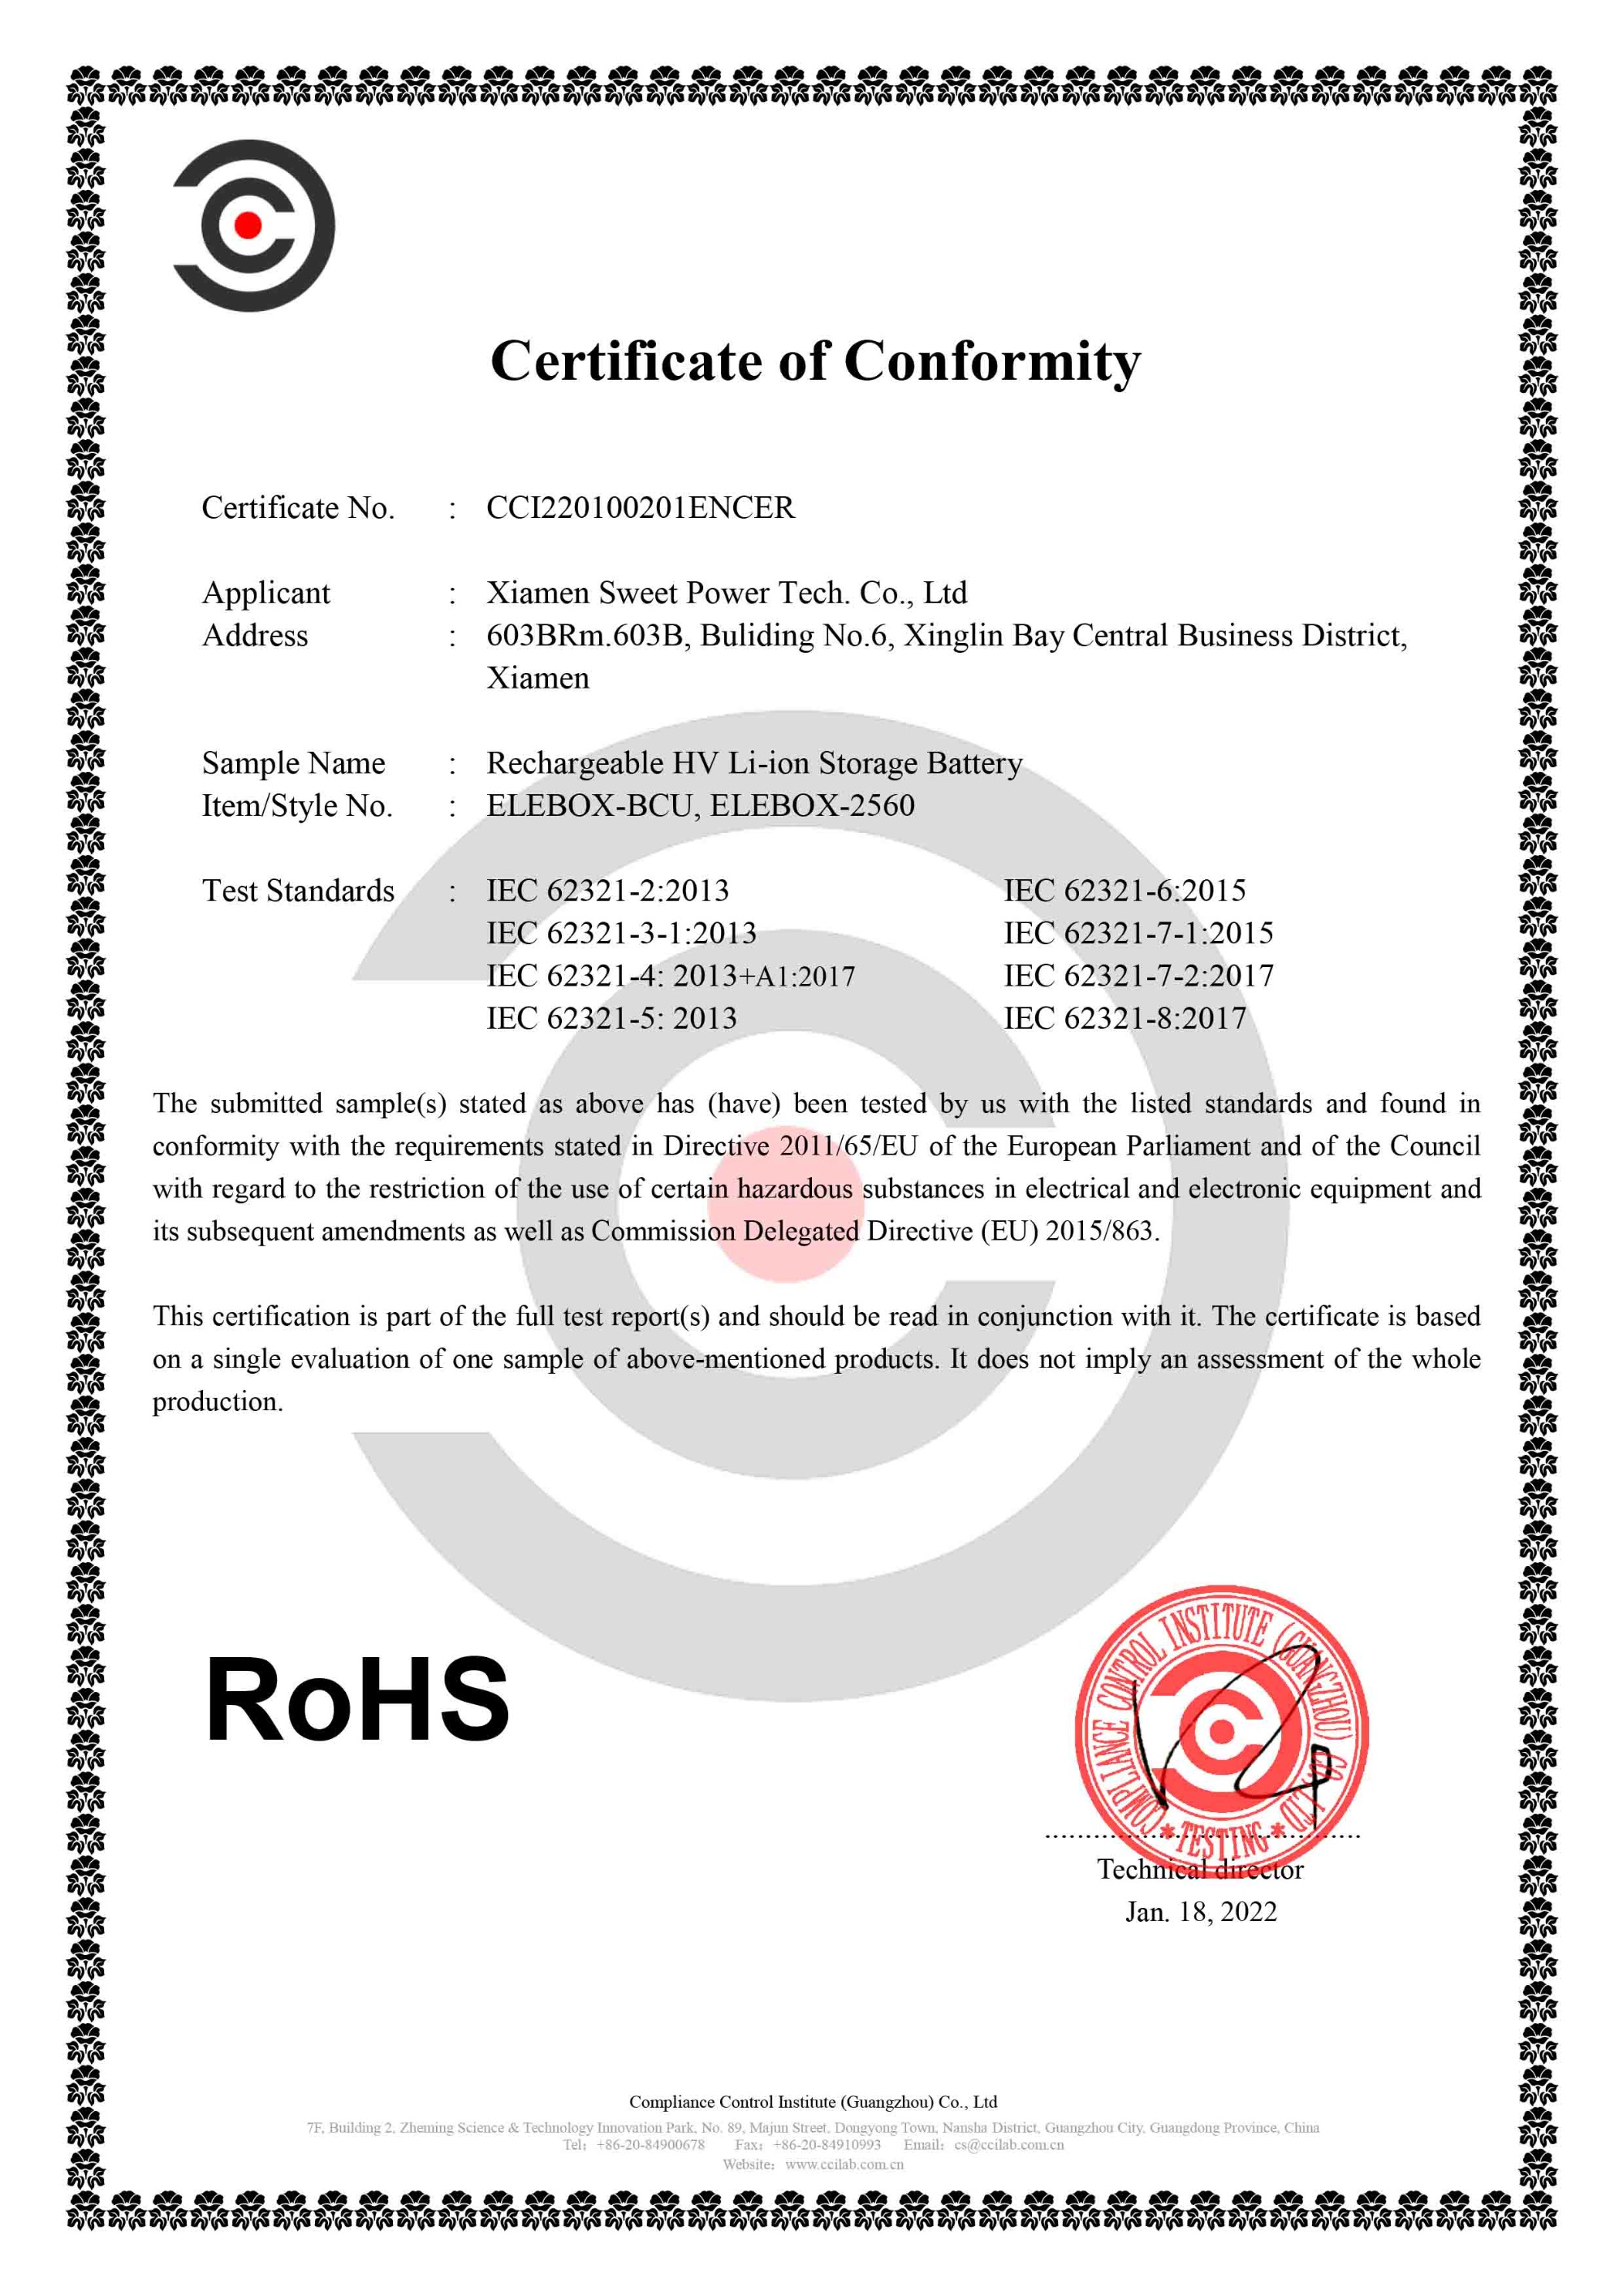 ROSH certification